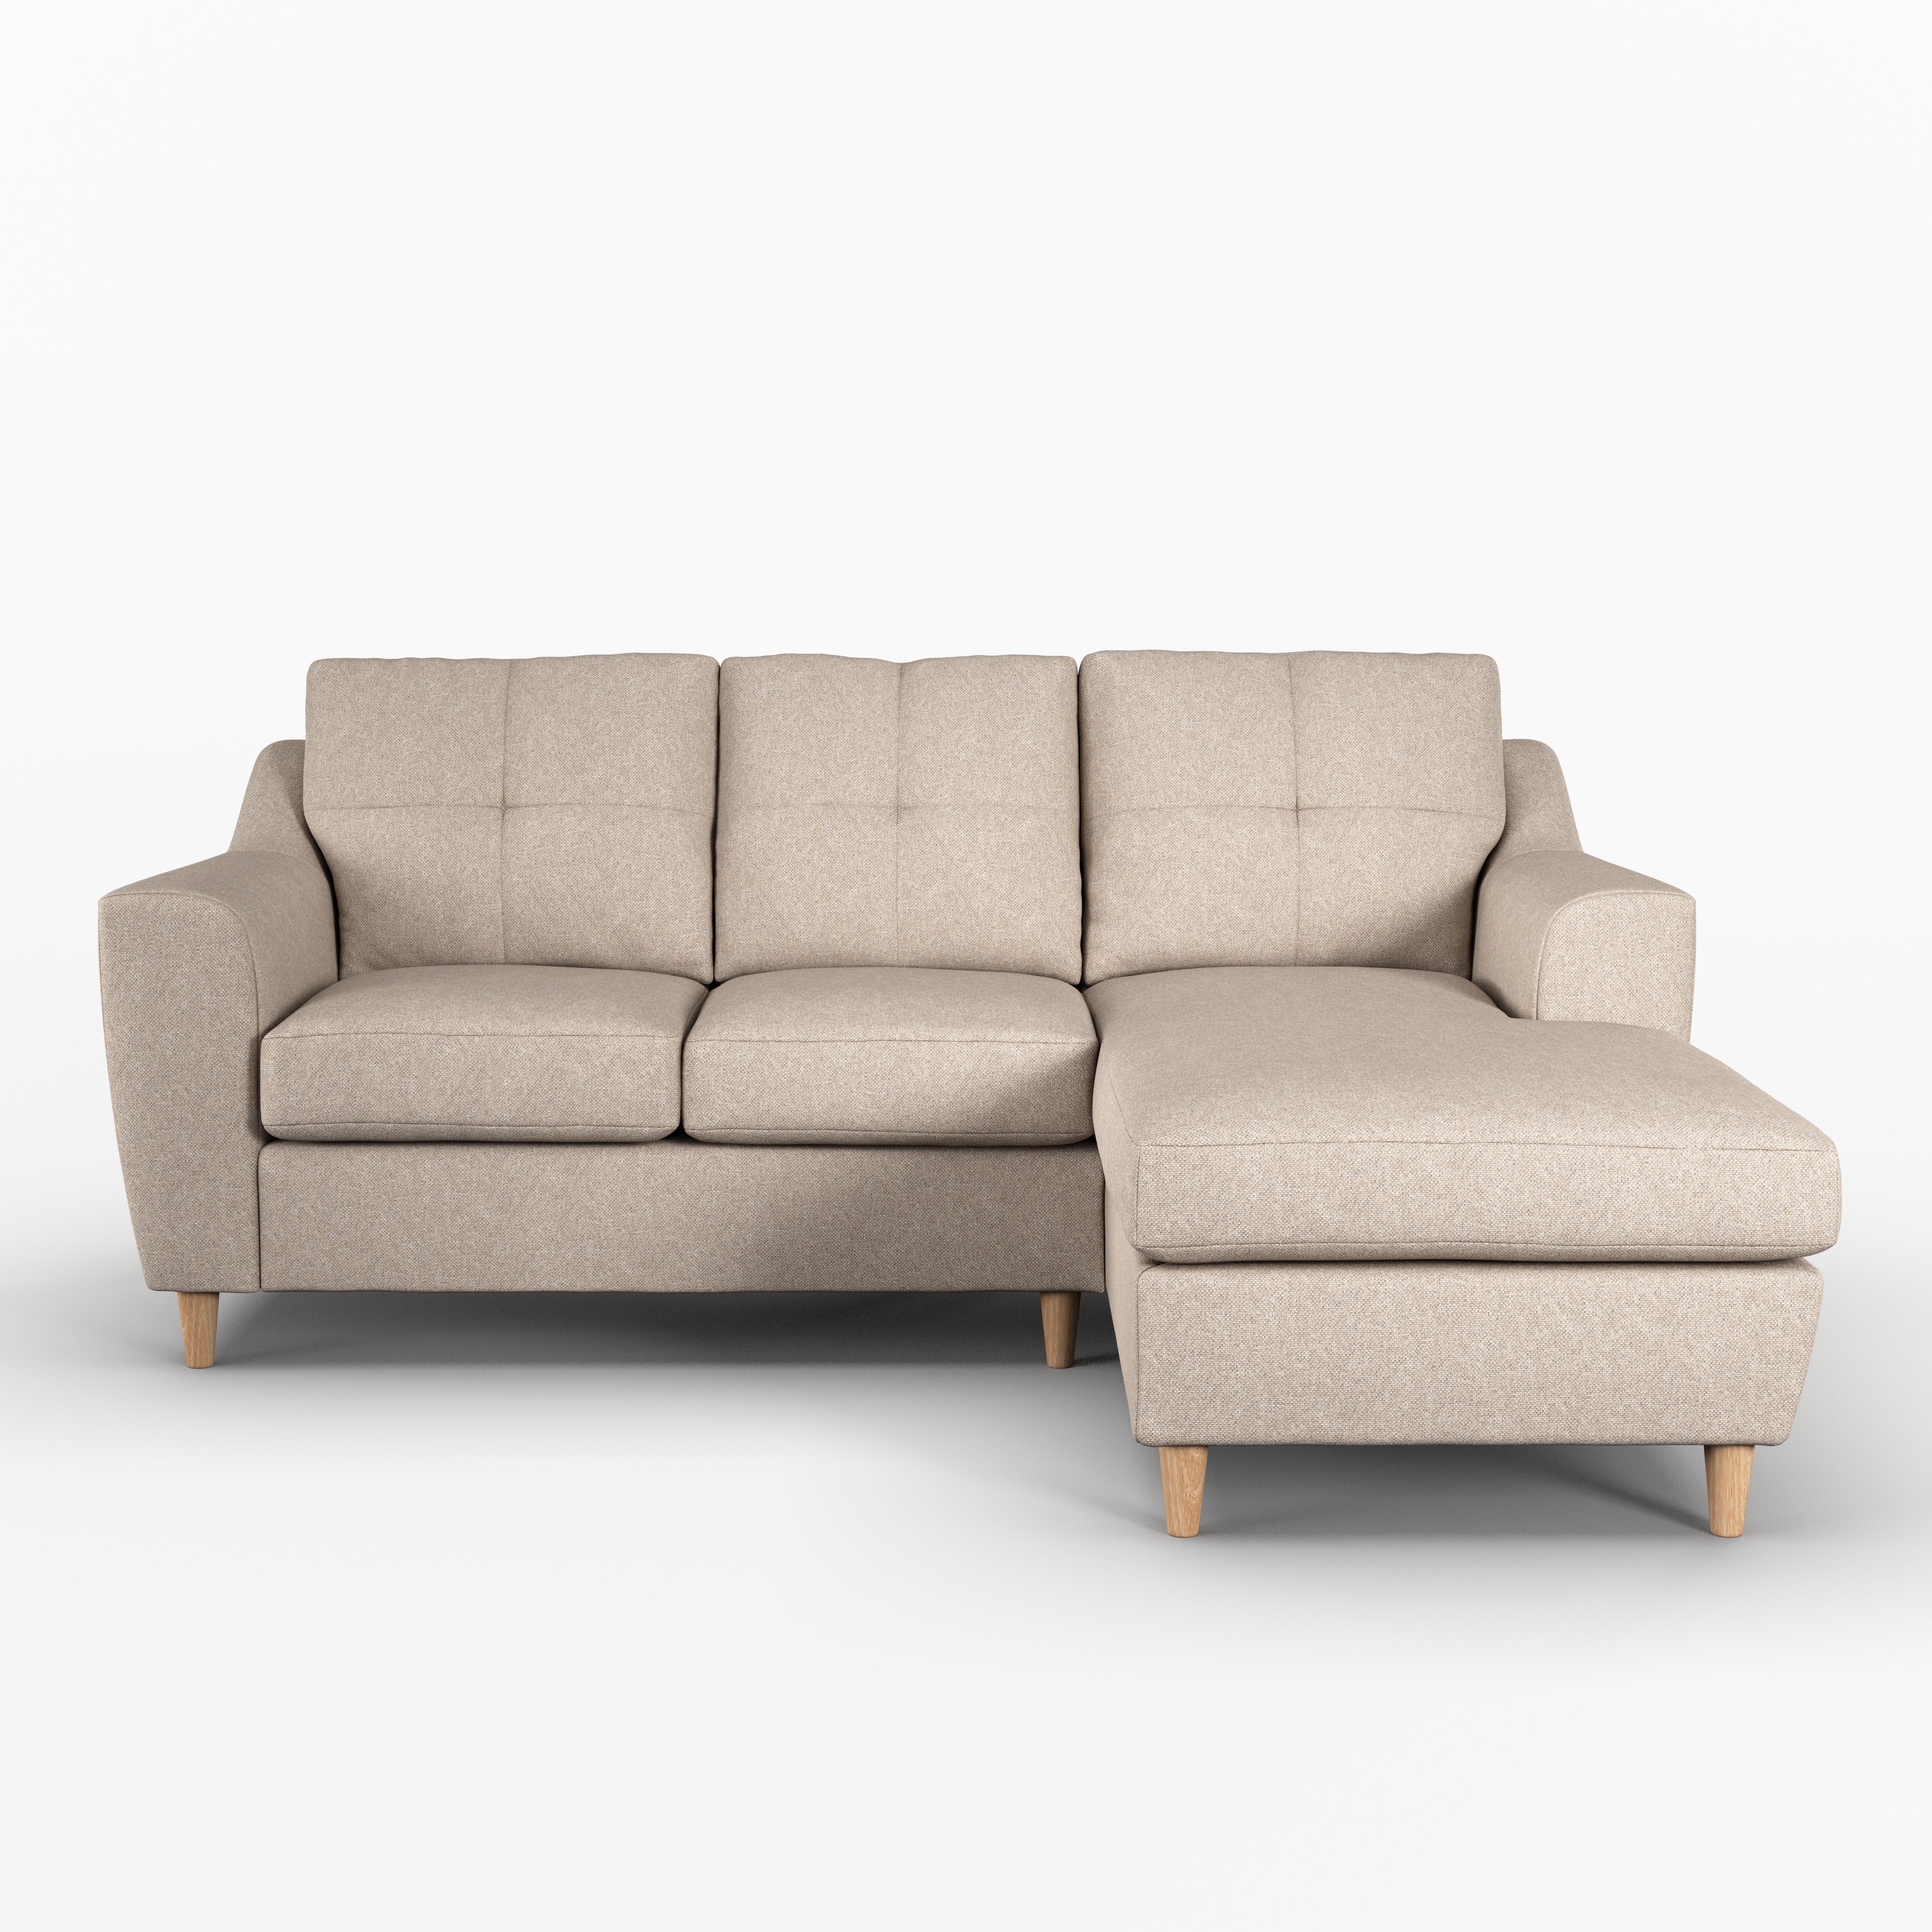 Baxter Fabric Corner Sofa Collection